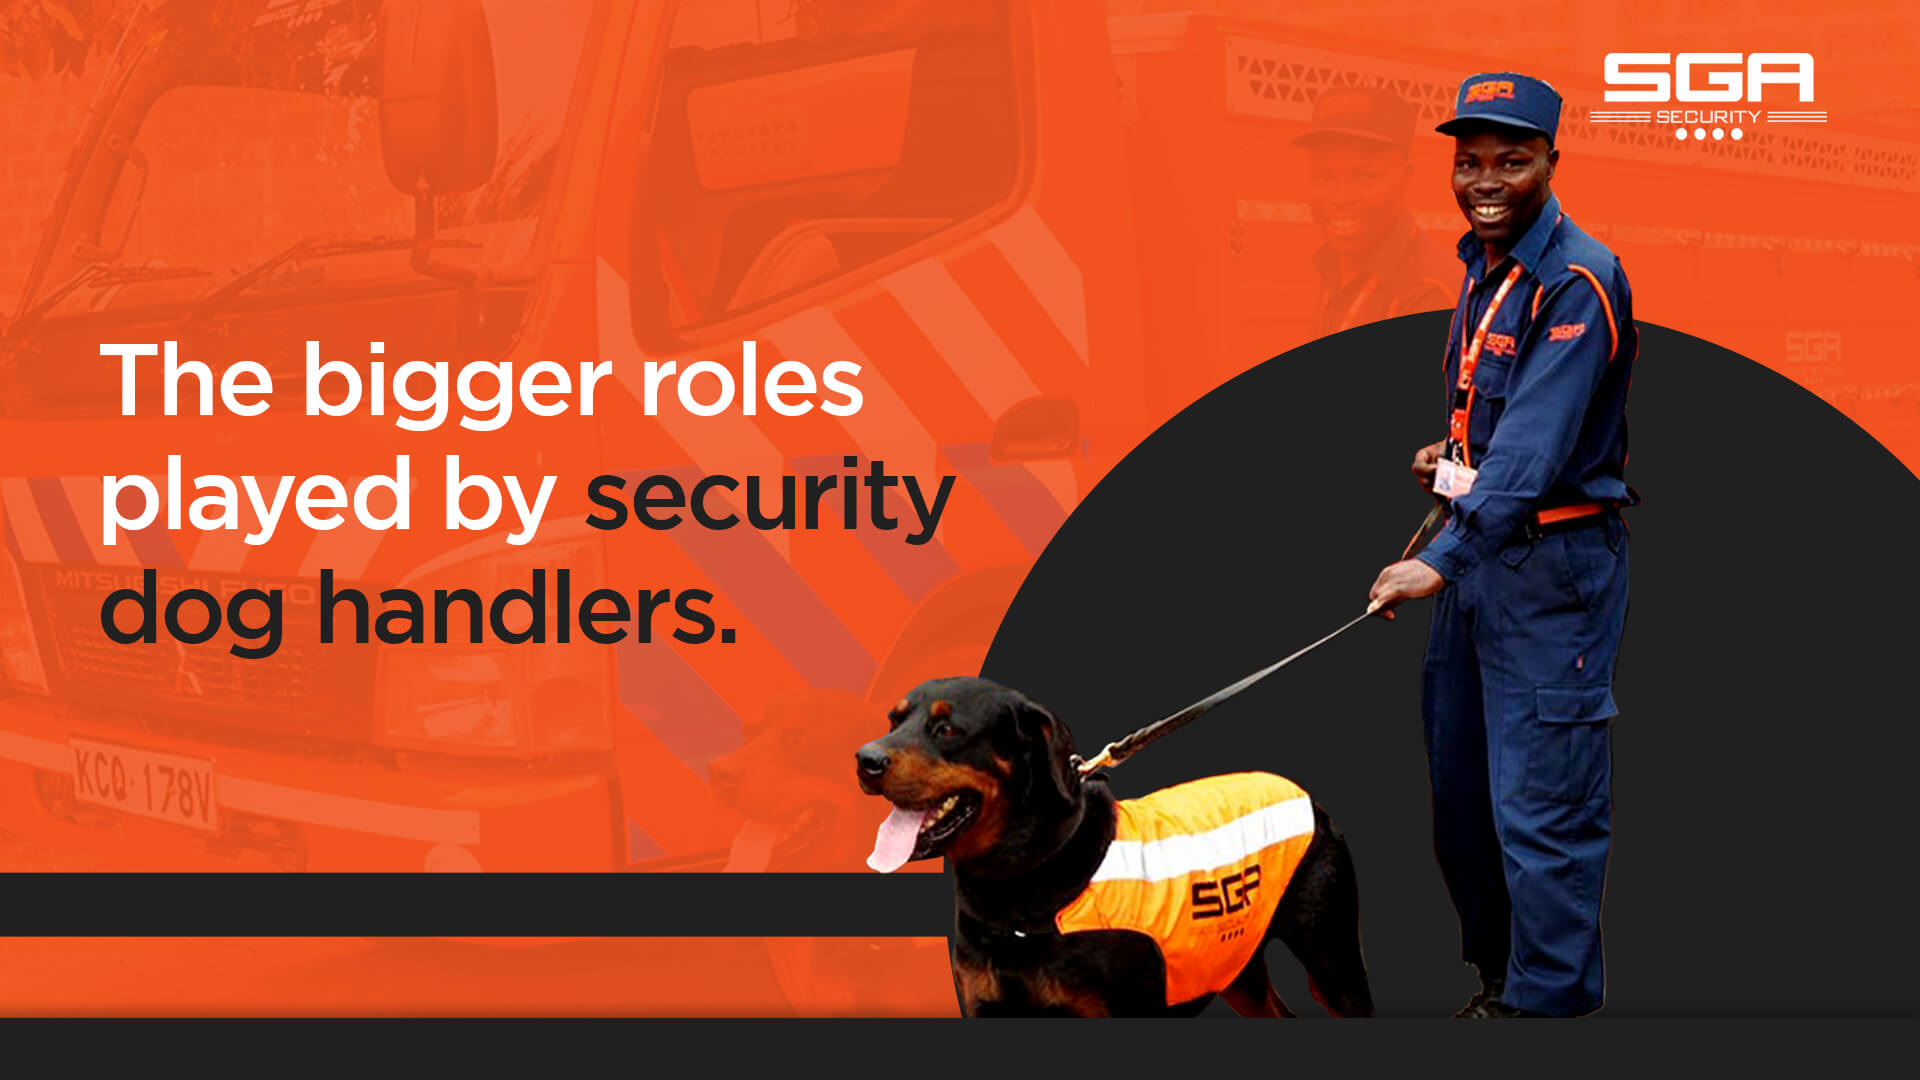 SGA officer handling a security dog